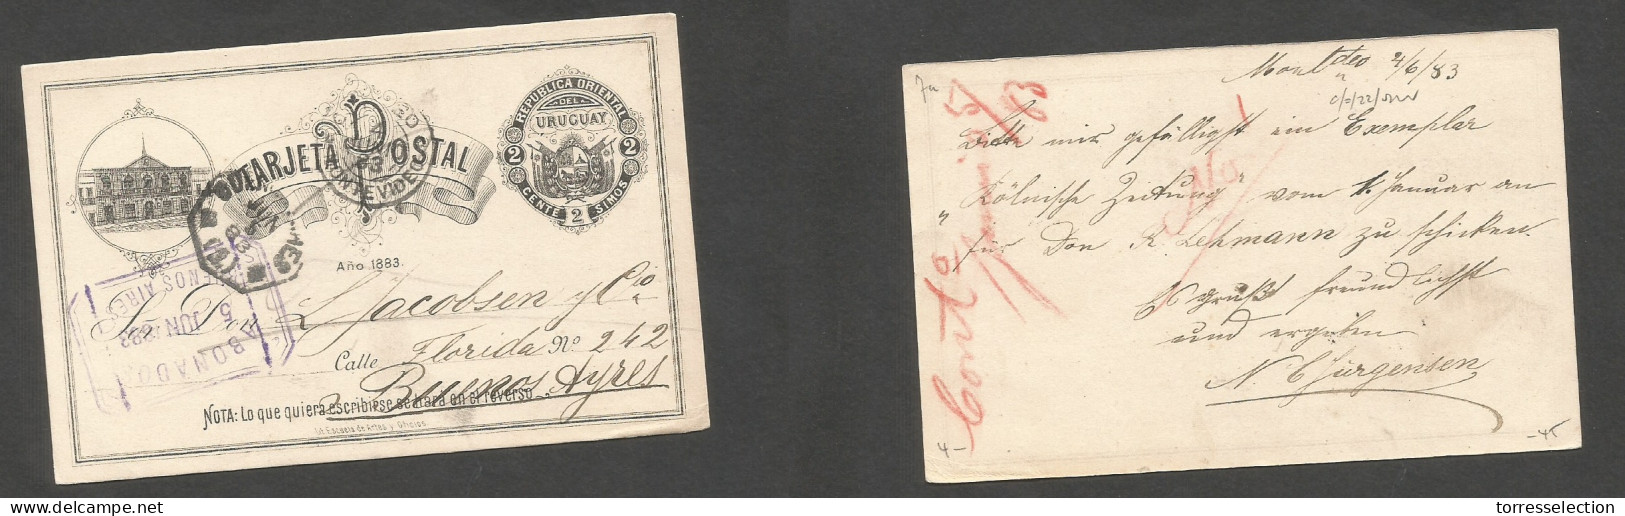 URUGUAY. 1883 (4 June) Mont - Argentina, Buenos Aires (5 June) 2c Black Early Overseas Illustr Stat Card. VF. XSALE. - Uruguay